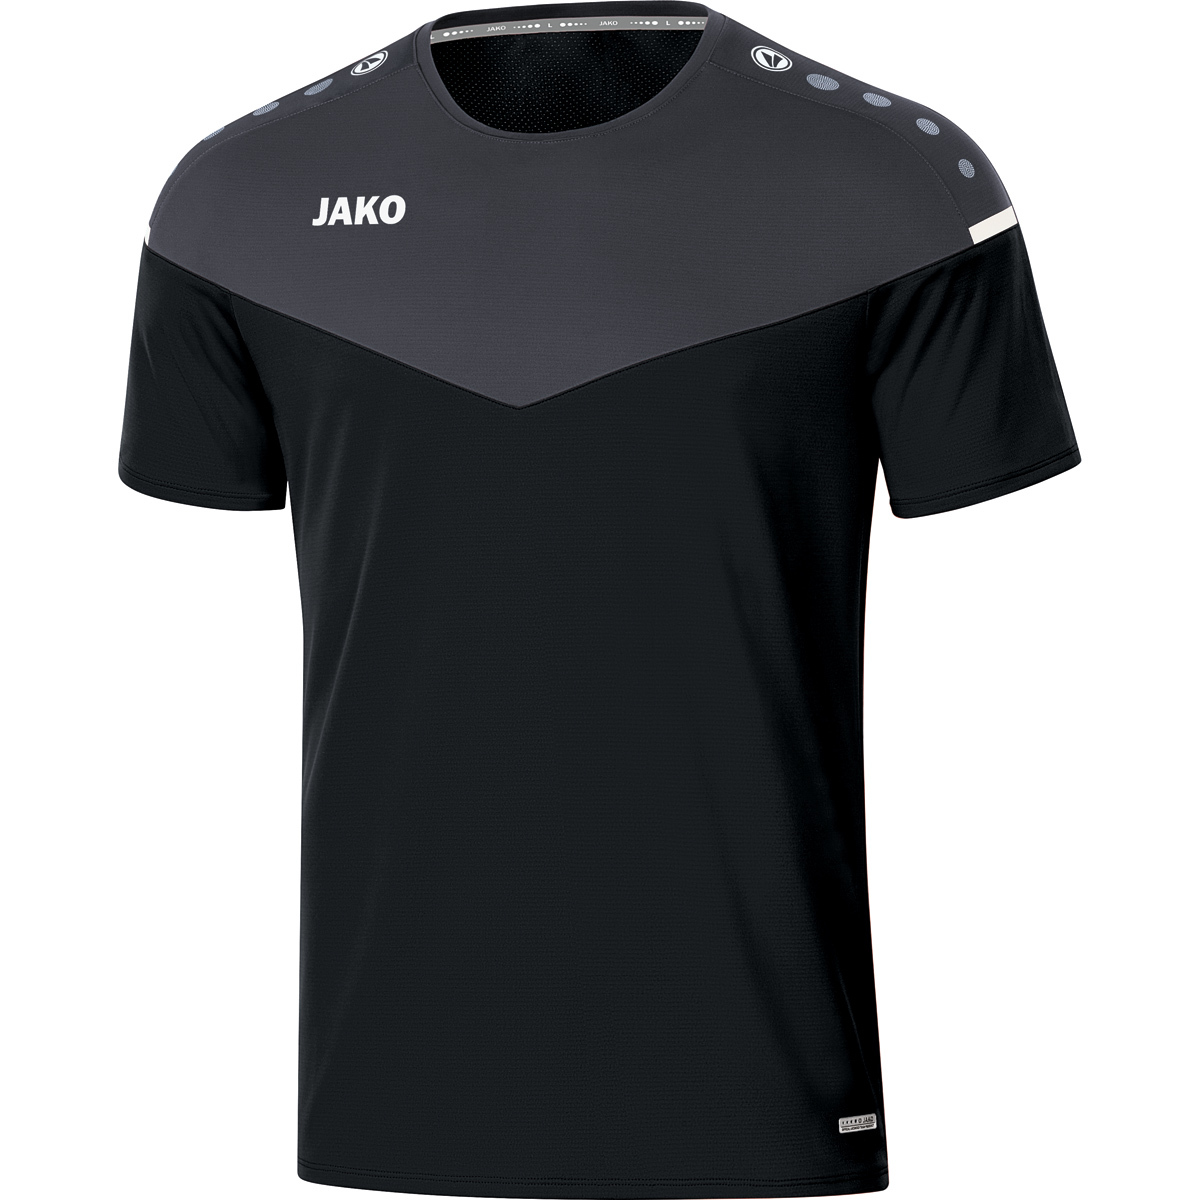 JAKO T-Shirt Champ 2.0 schwarz/anthrazit, Herren, Gr. XXL, 6120